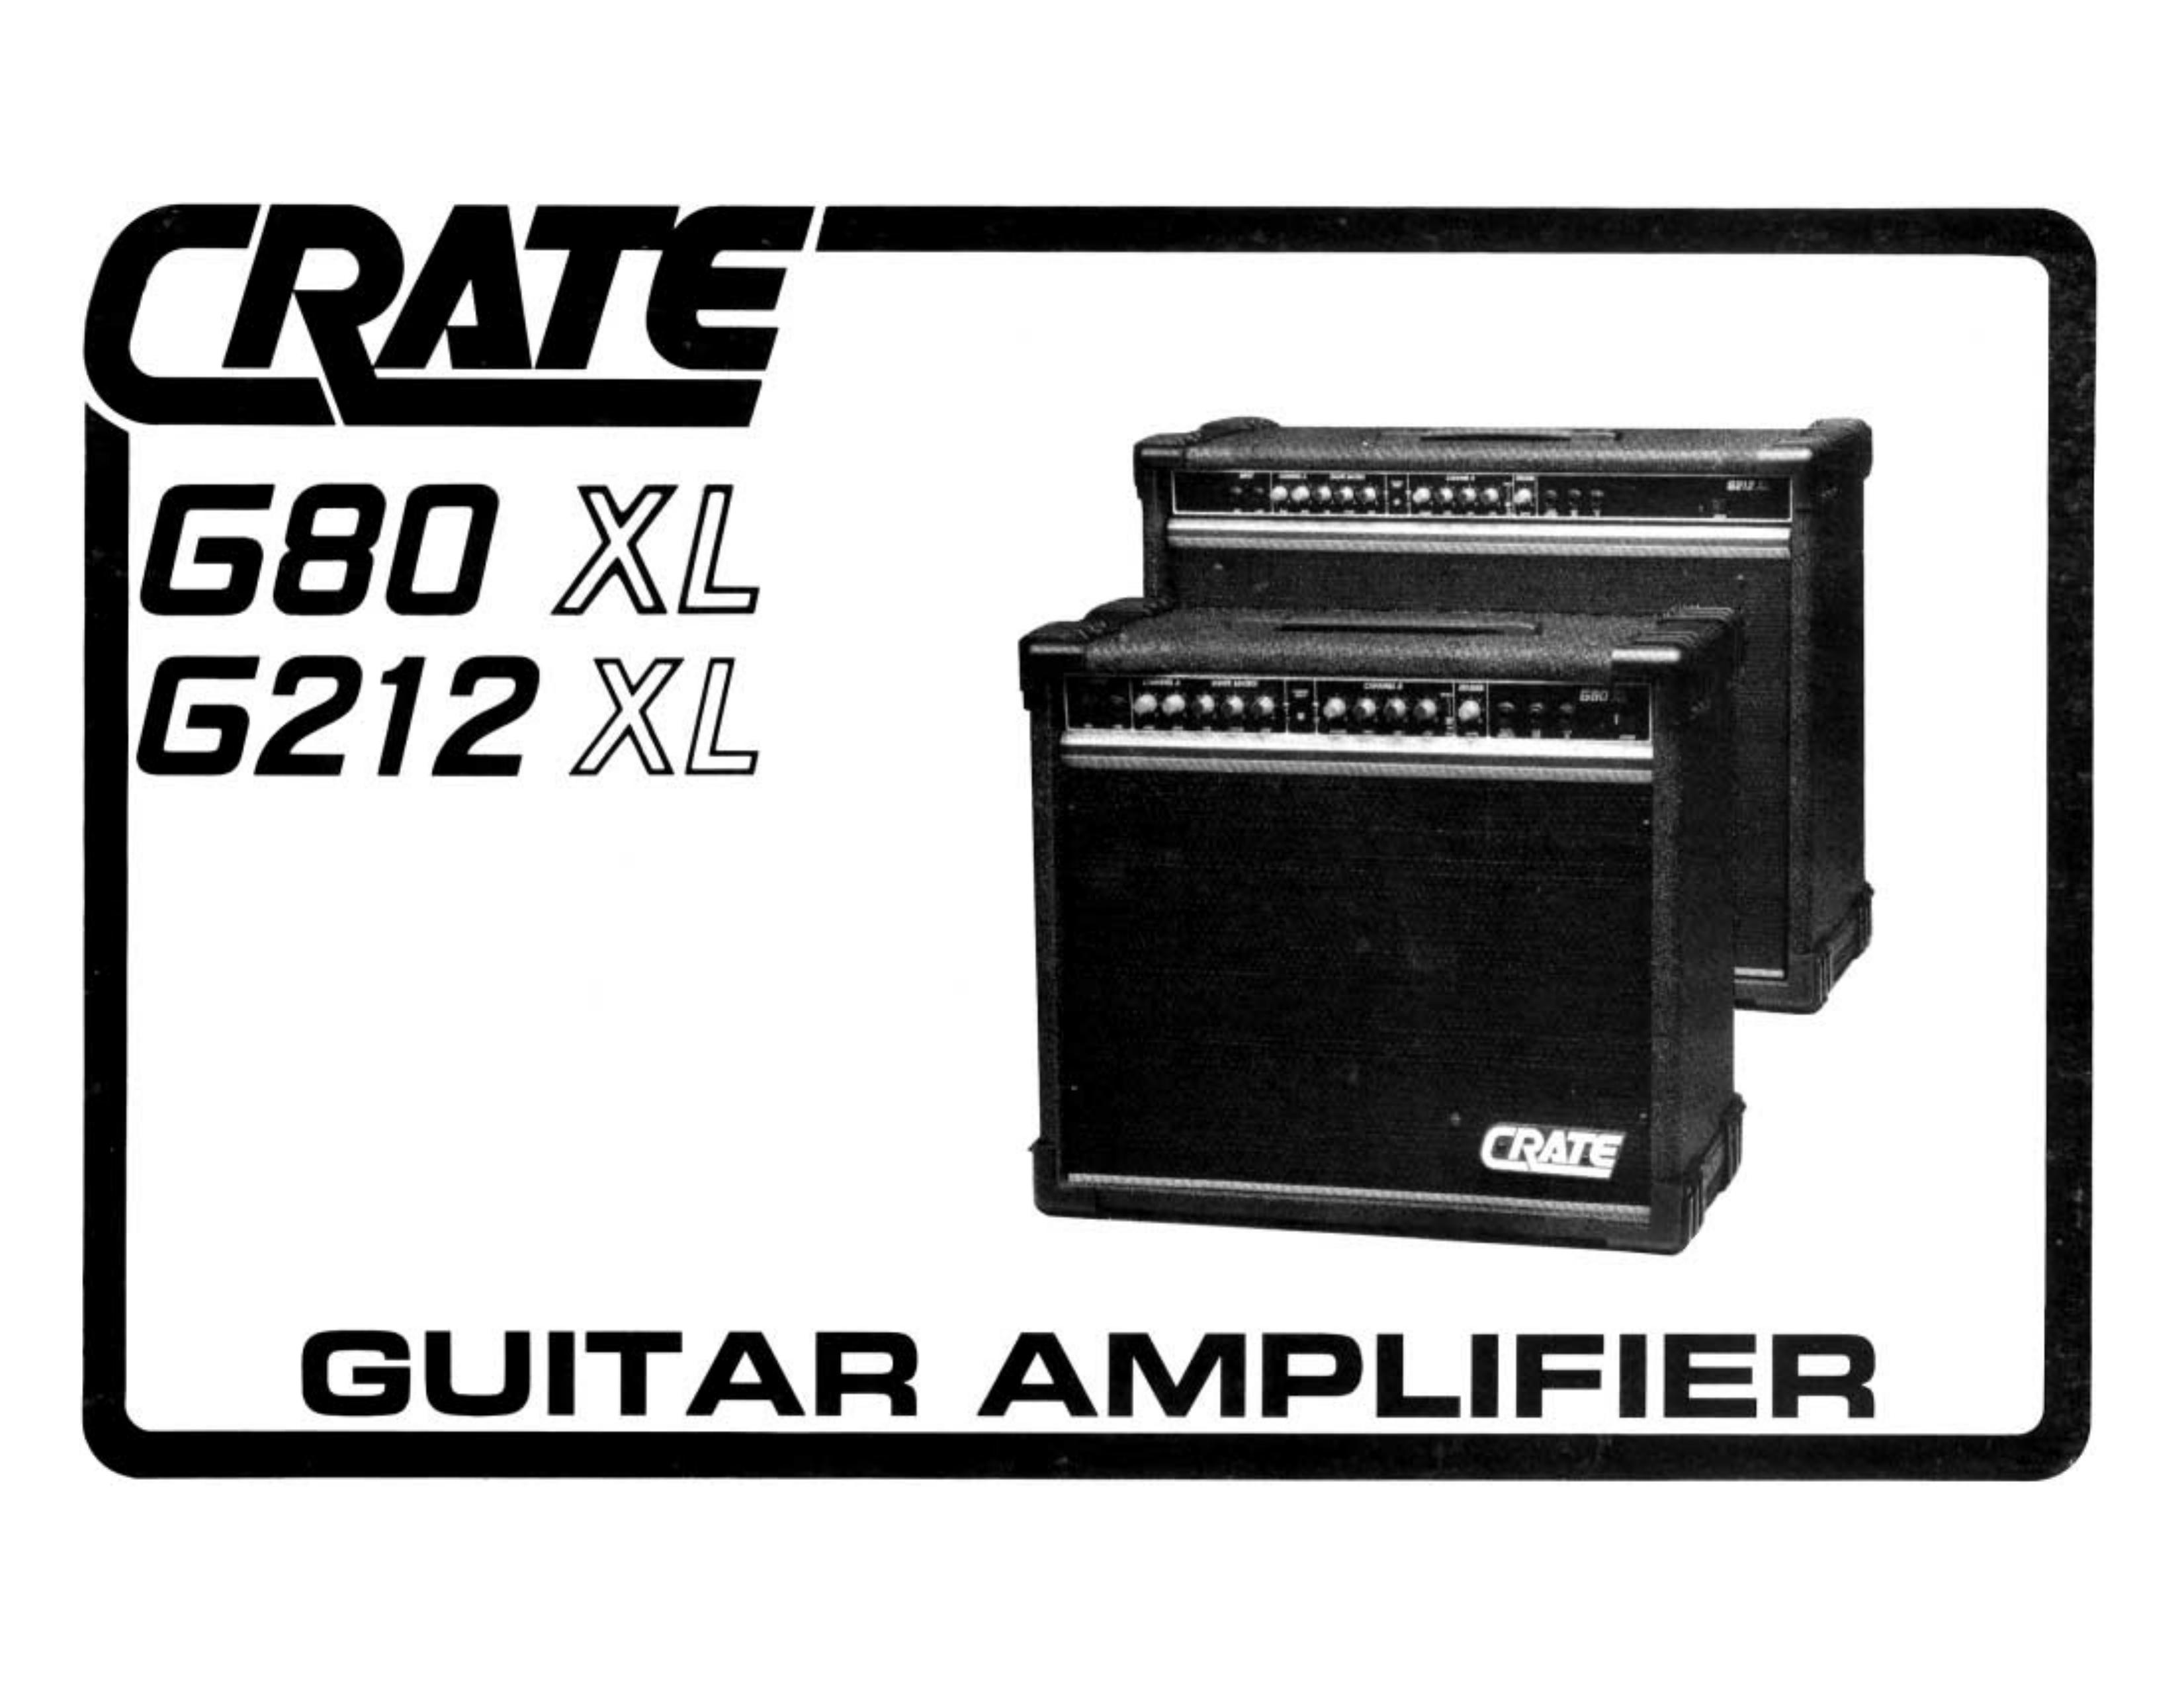 Crate Amplifiers G80XL Musical Instrument Amplifier User Manual